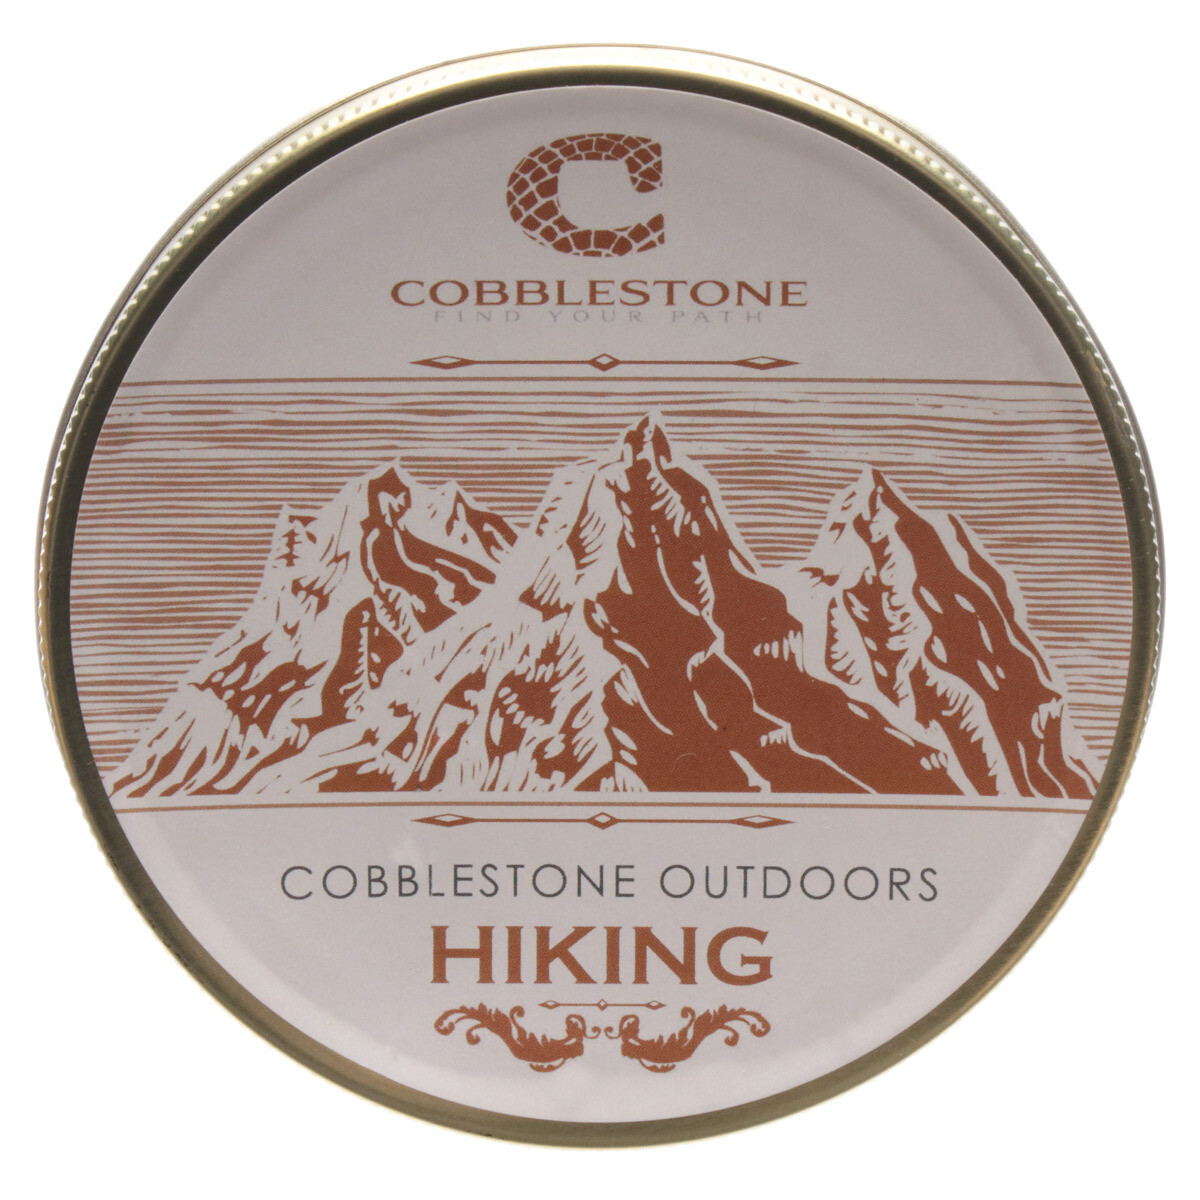 Cobblestone Outdoors Hiking Pipe Tobacco 50g Tin